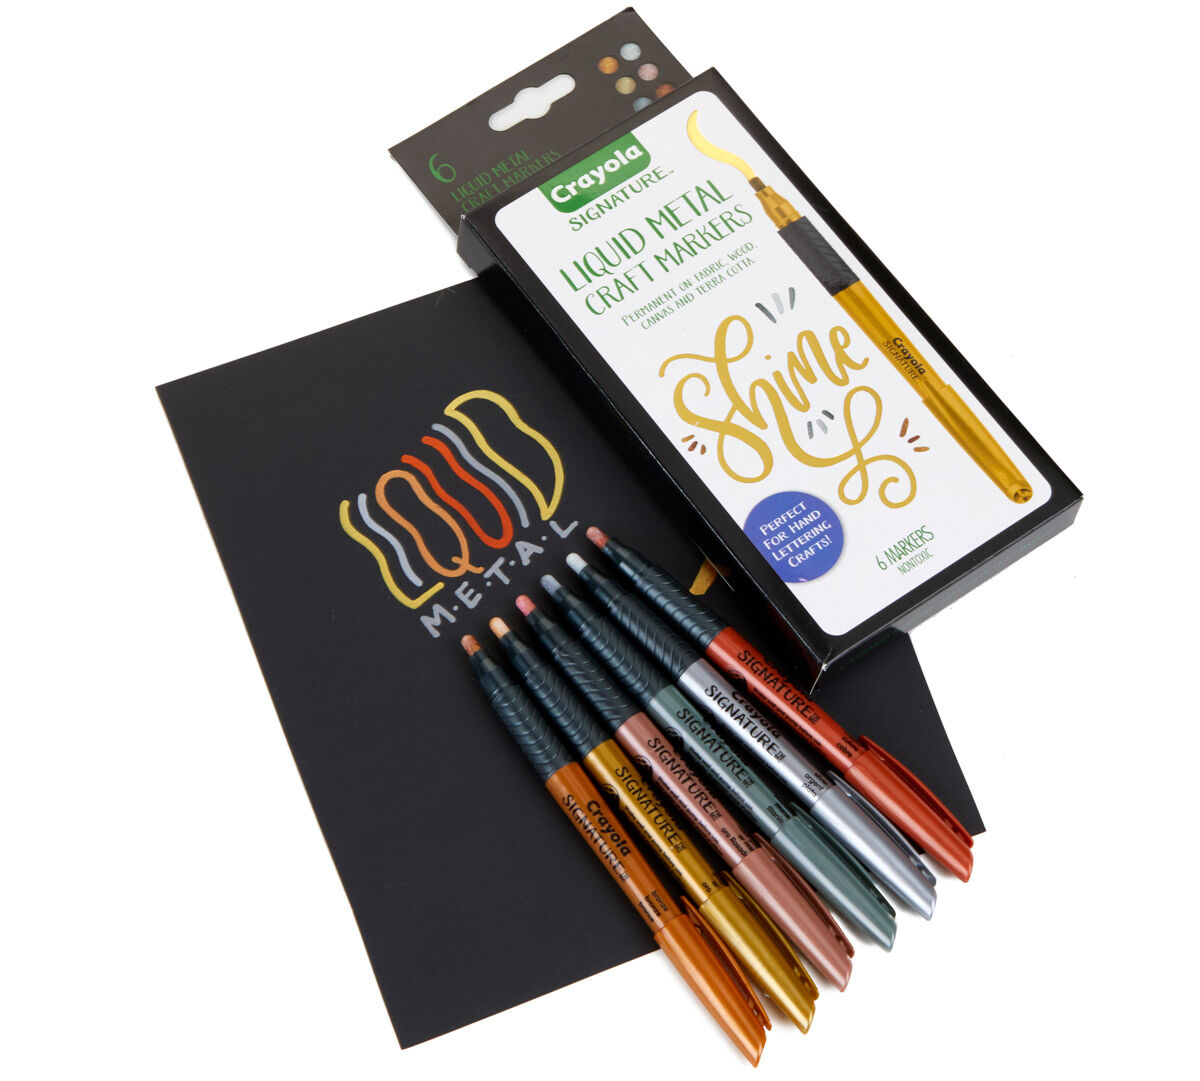 Crayola Signature Liquid Metal Craft Marker Set